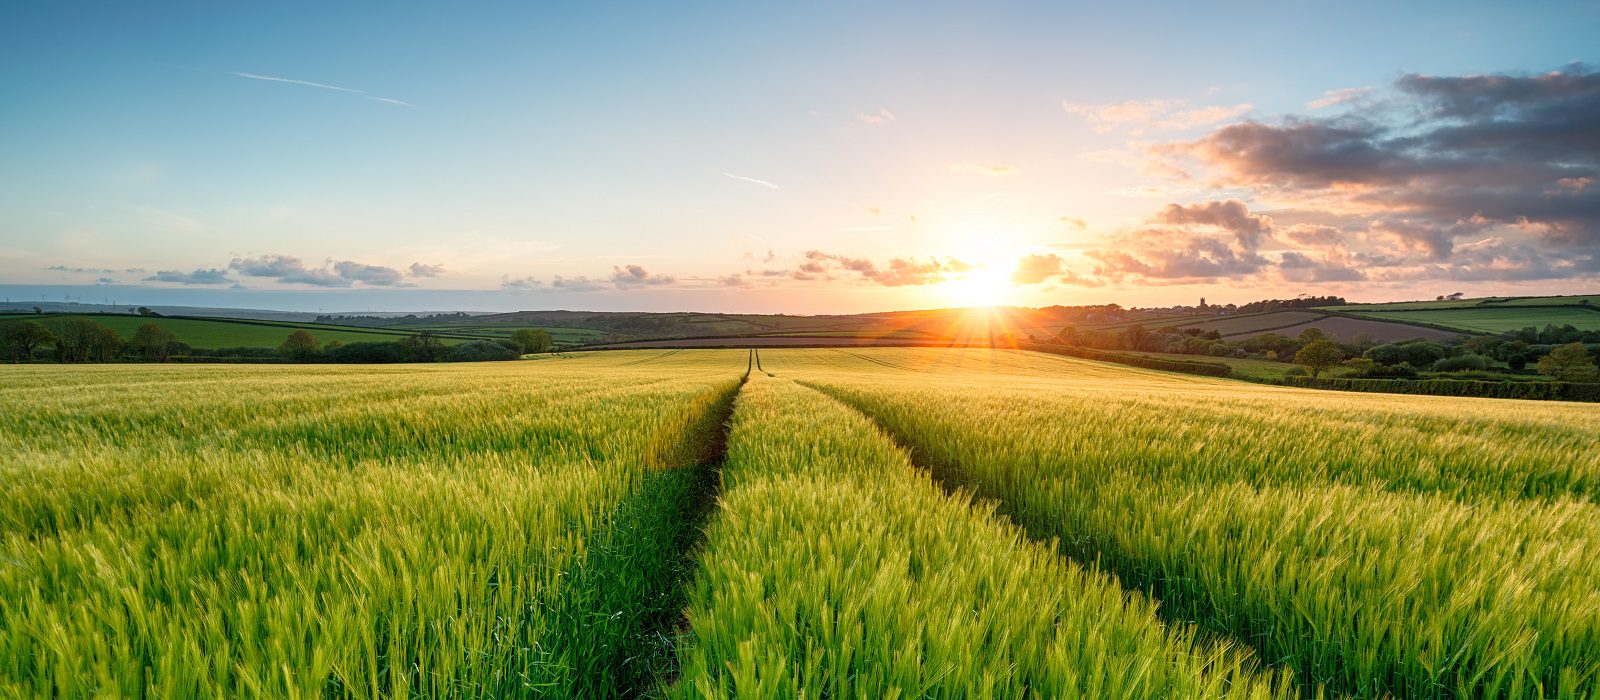 Sunset over fields of lush green barley growing near Wadebridge in Cornwall